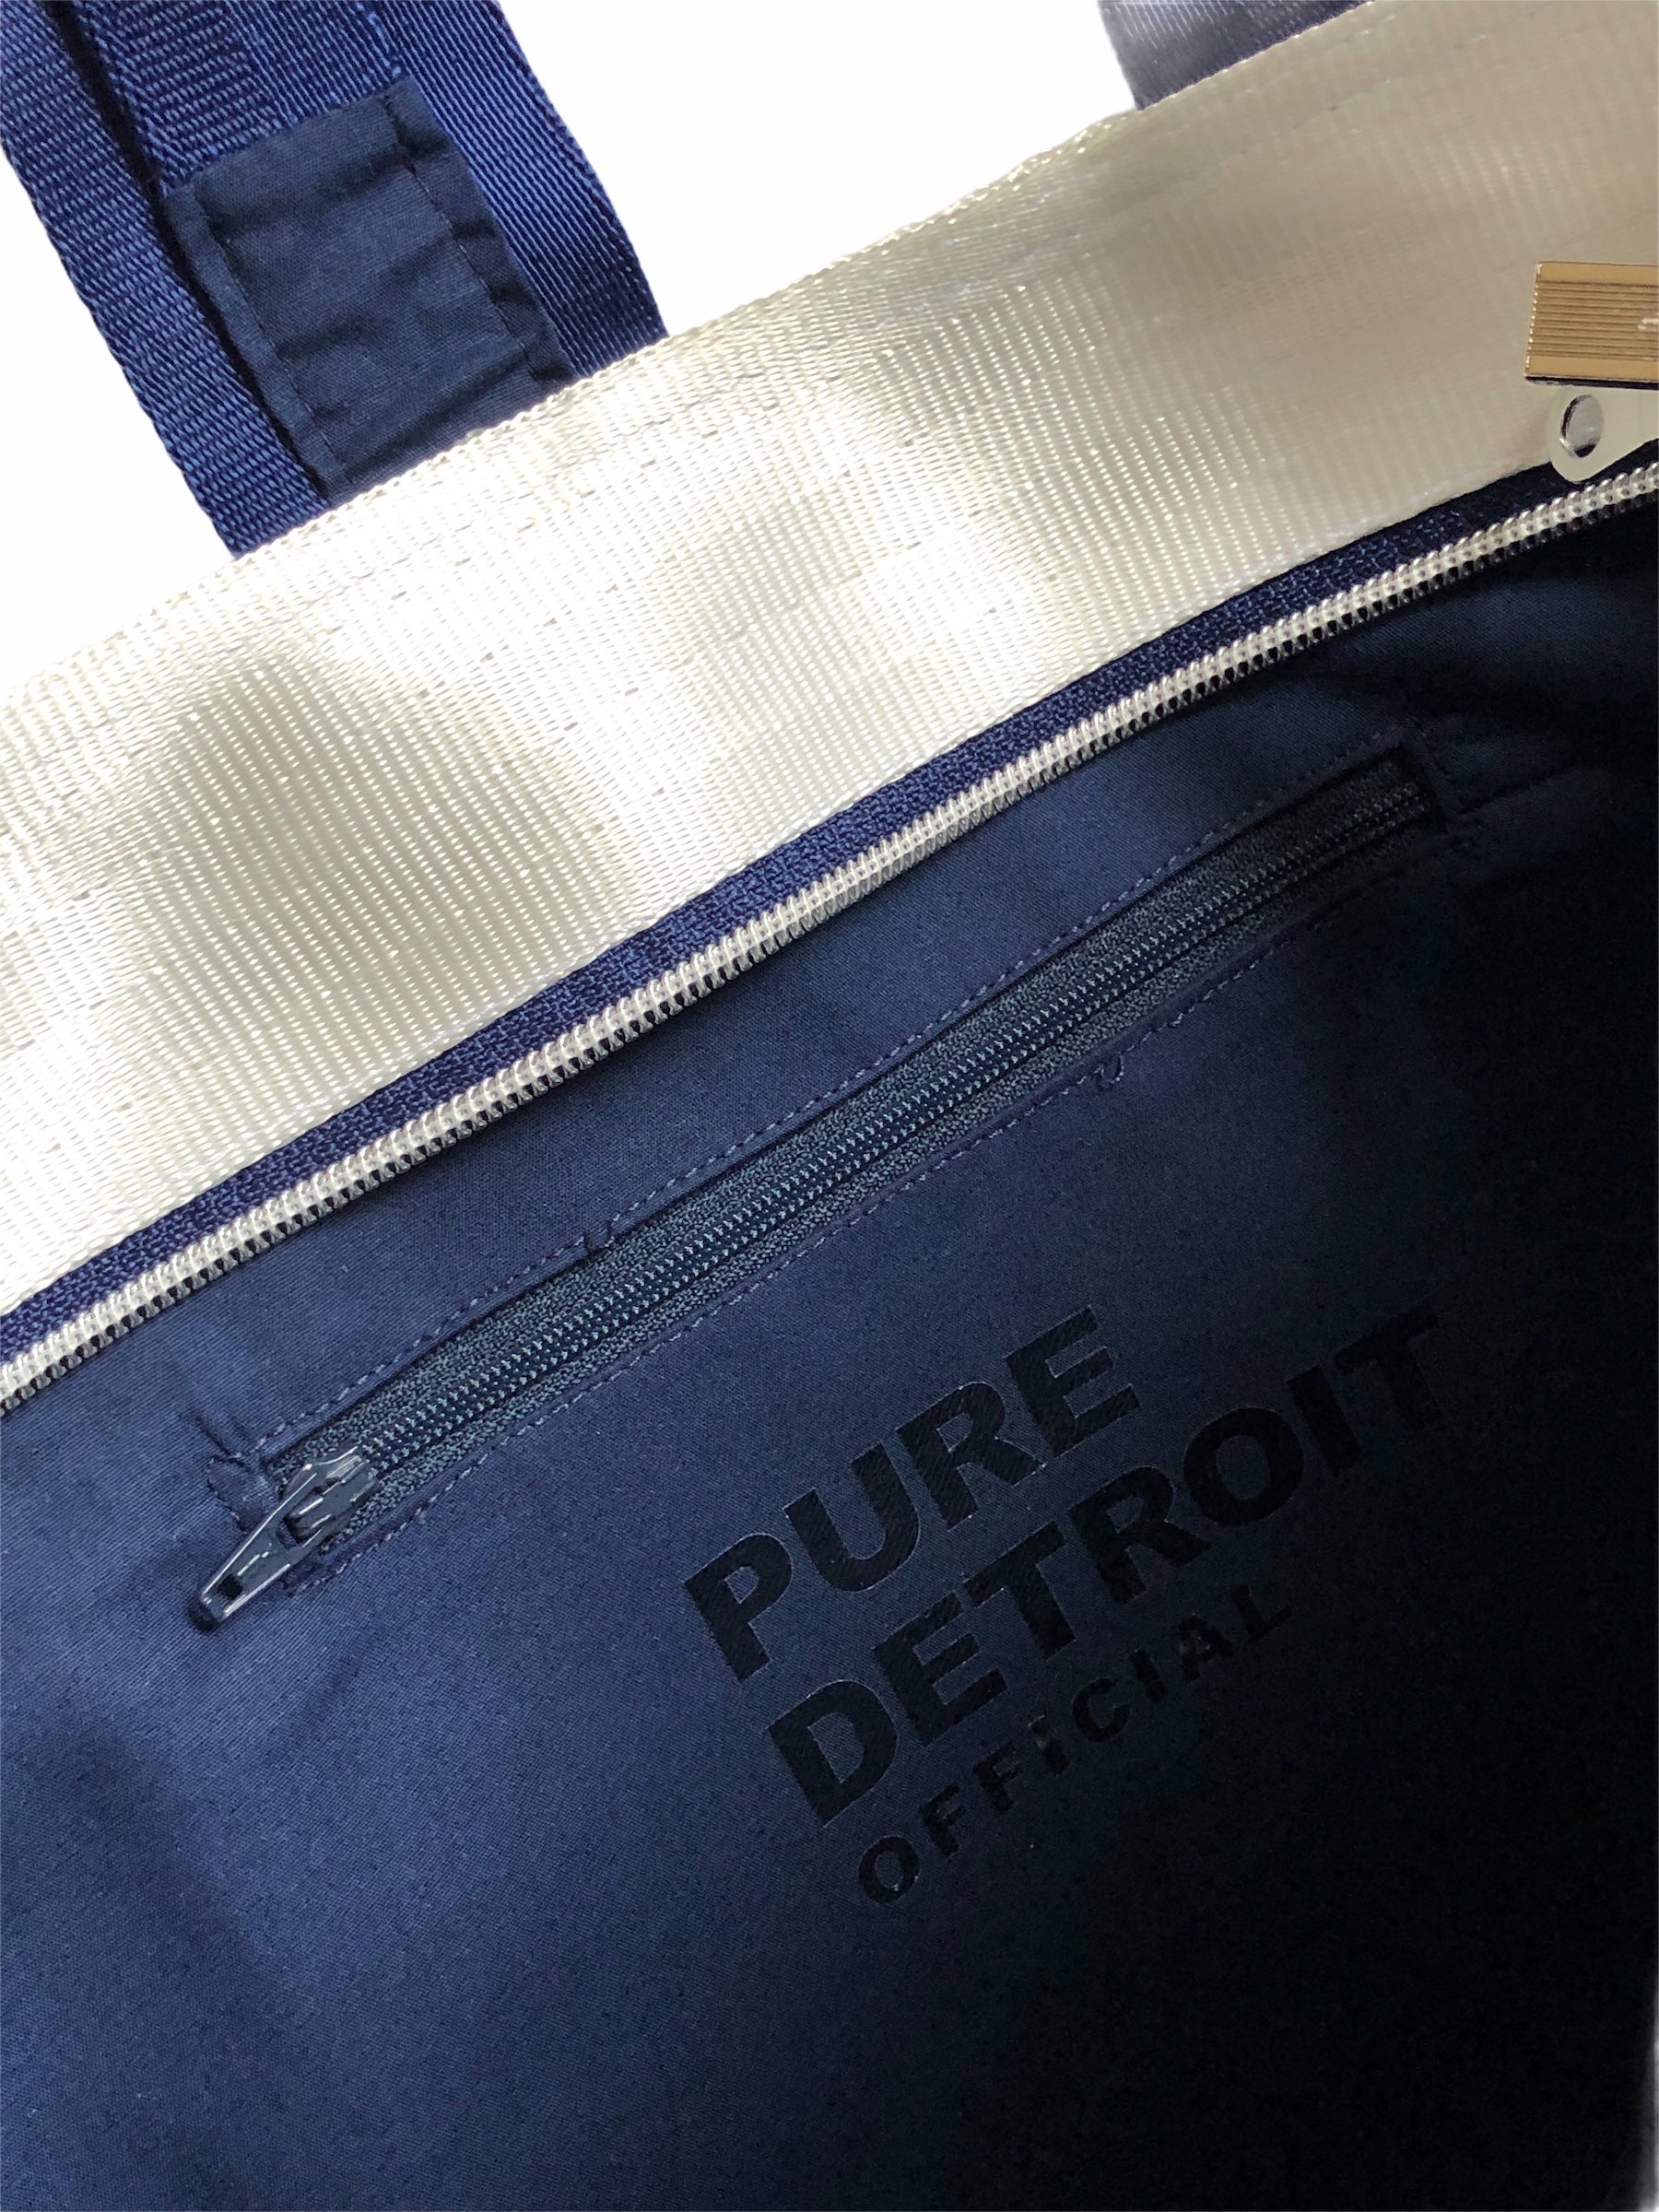 Pure Detroit OFFICIAL - Large Ring Tote Seatbelt Bag - Belle Isle Spectrum PRE ORDER Seatbelt Bags   